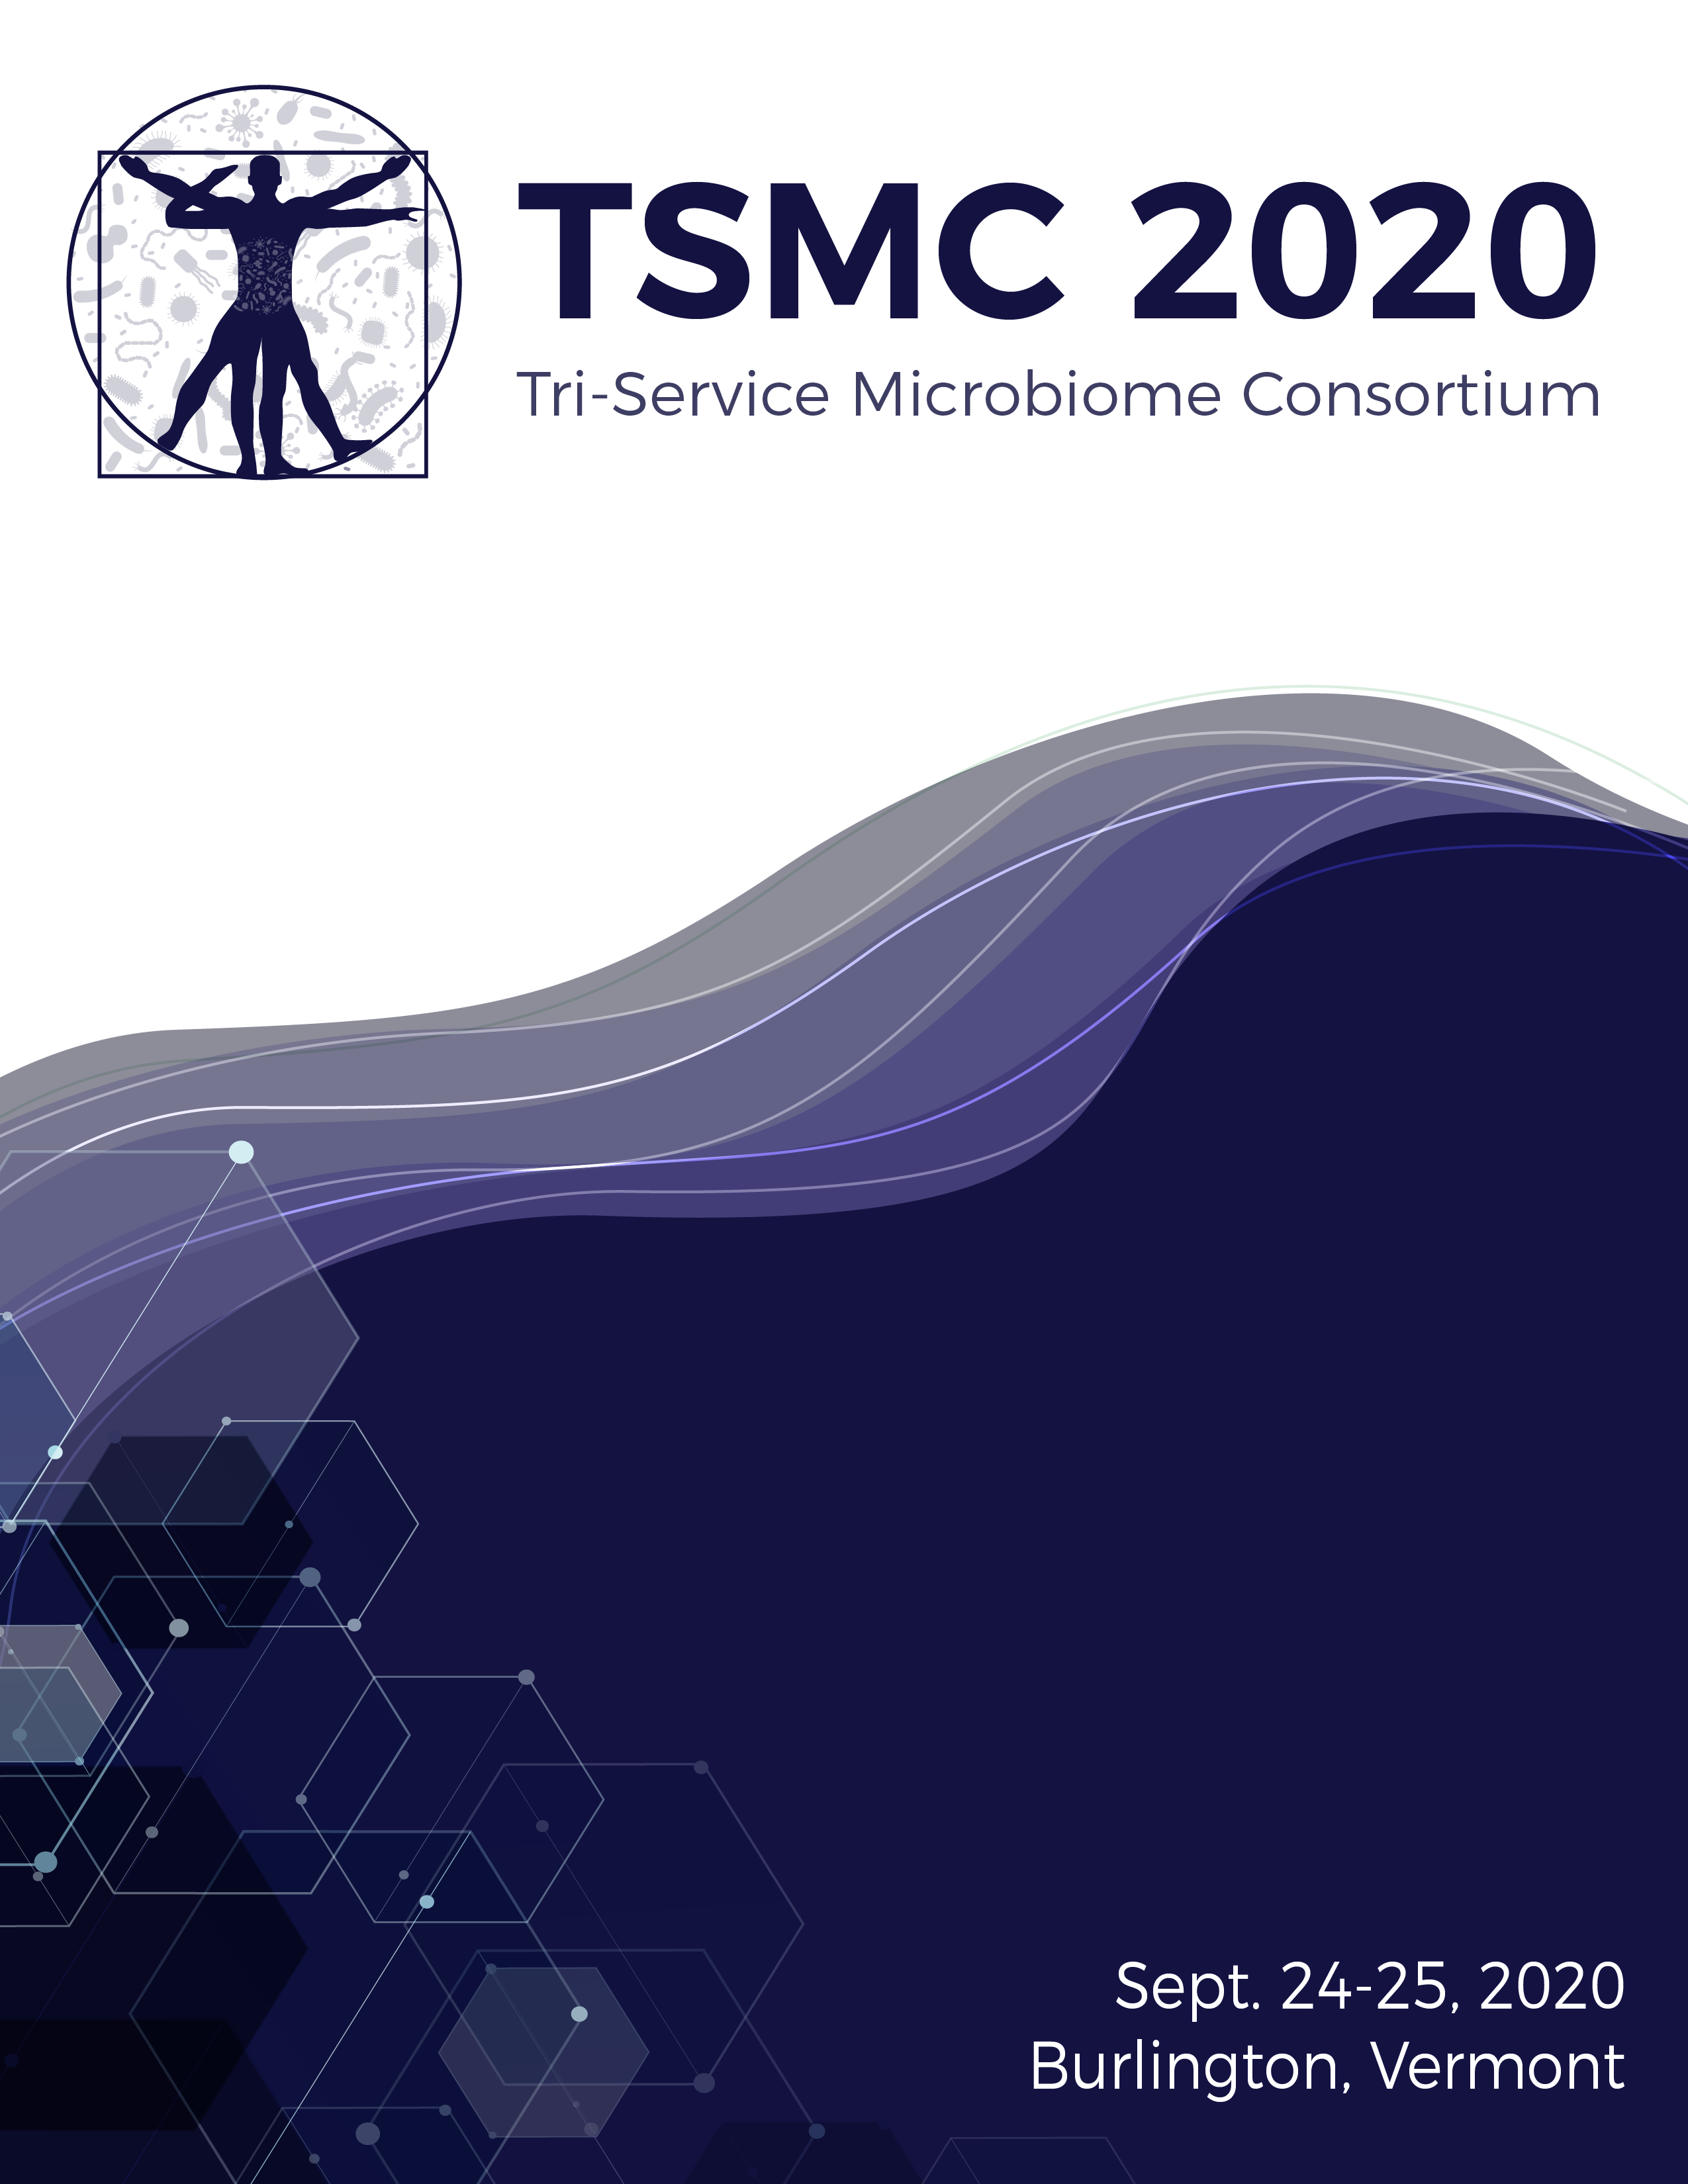 TSMC 2020 agenda